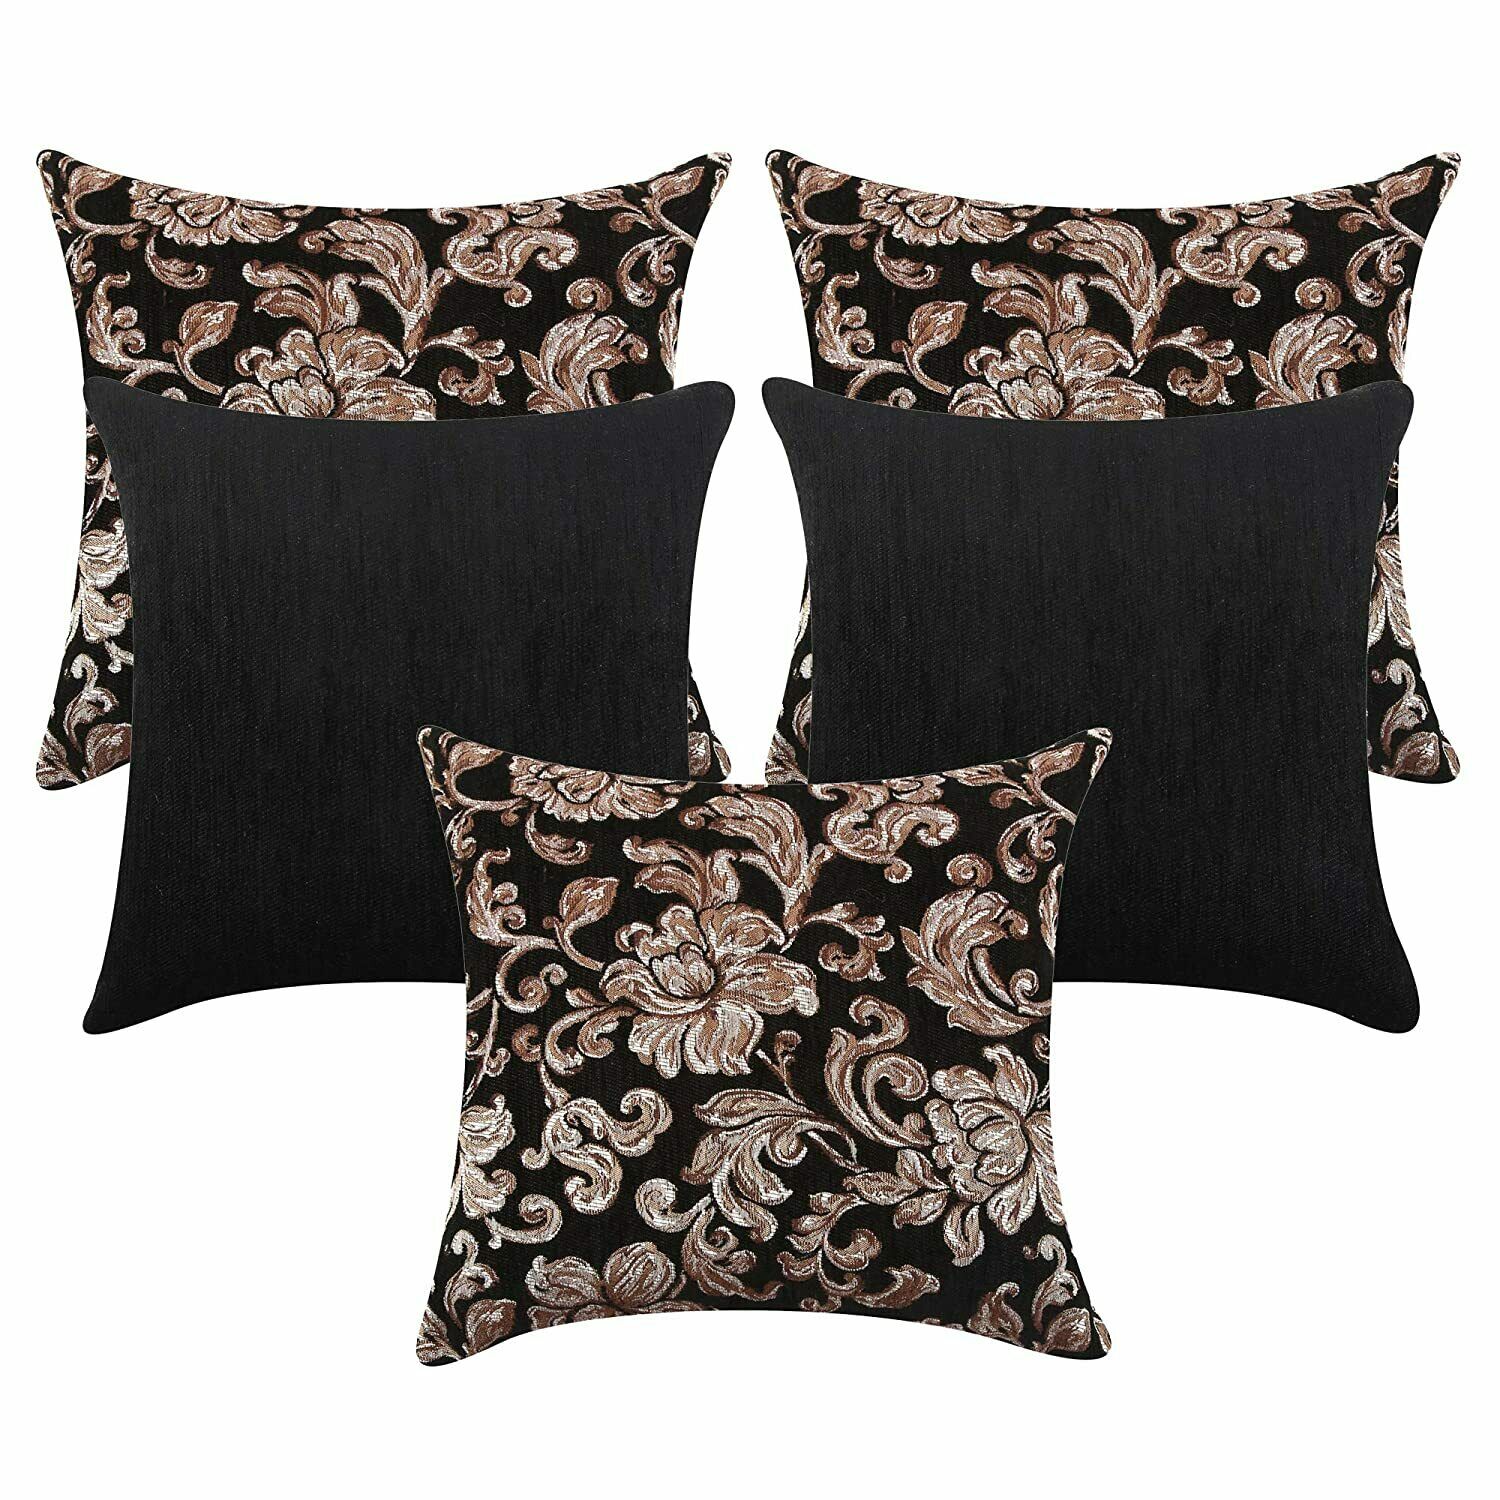 16 X 16 Inches, Set Of 5 Pcs Woven Jacquard Cushion Covers Of 150 Tc, Black